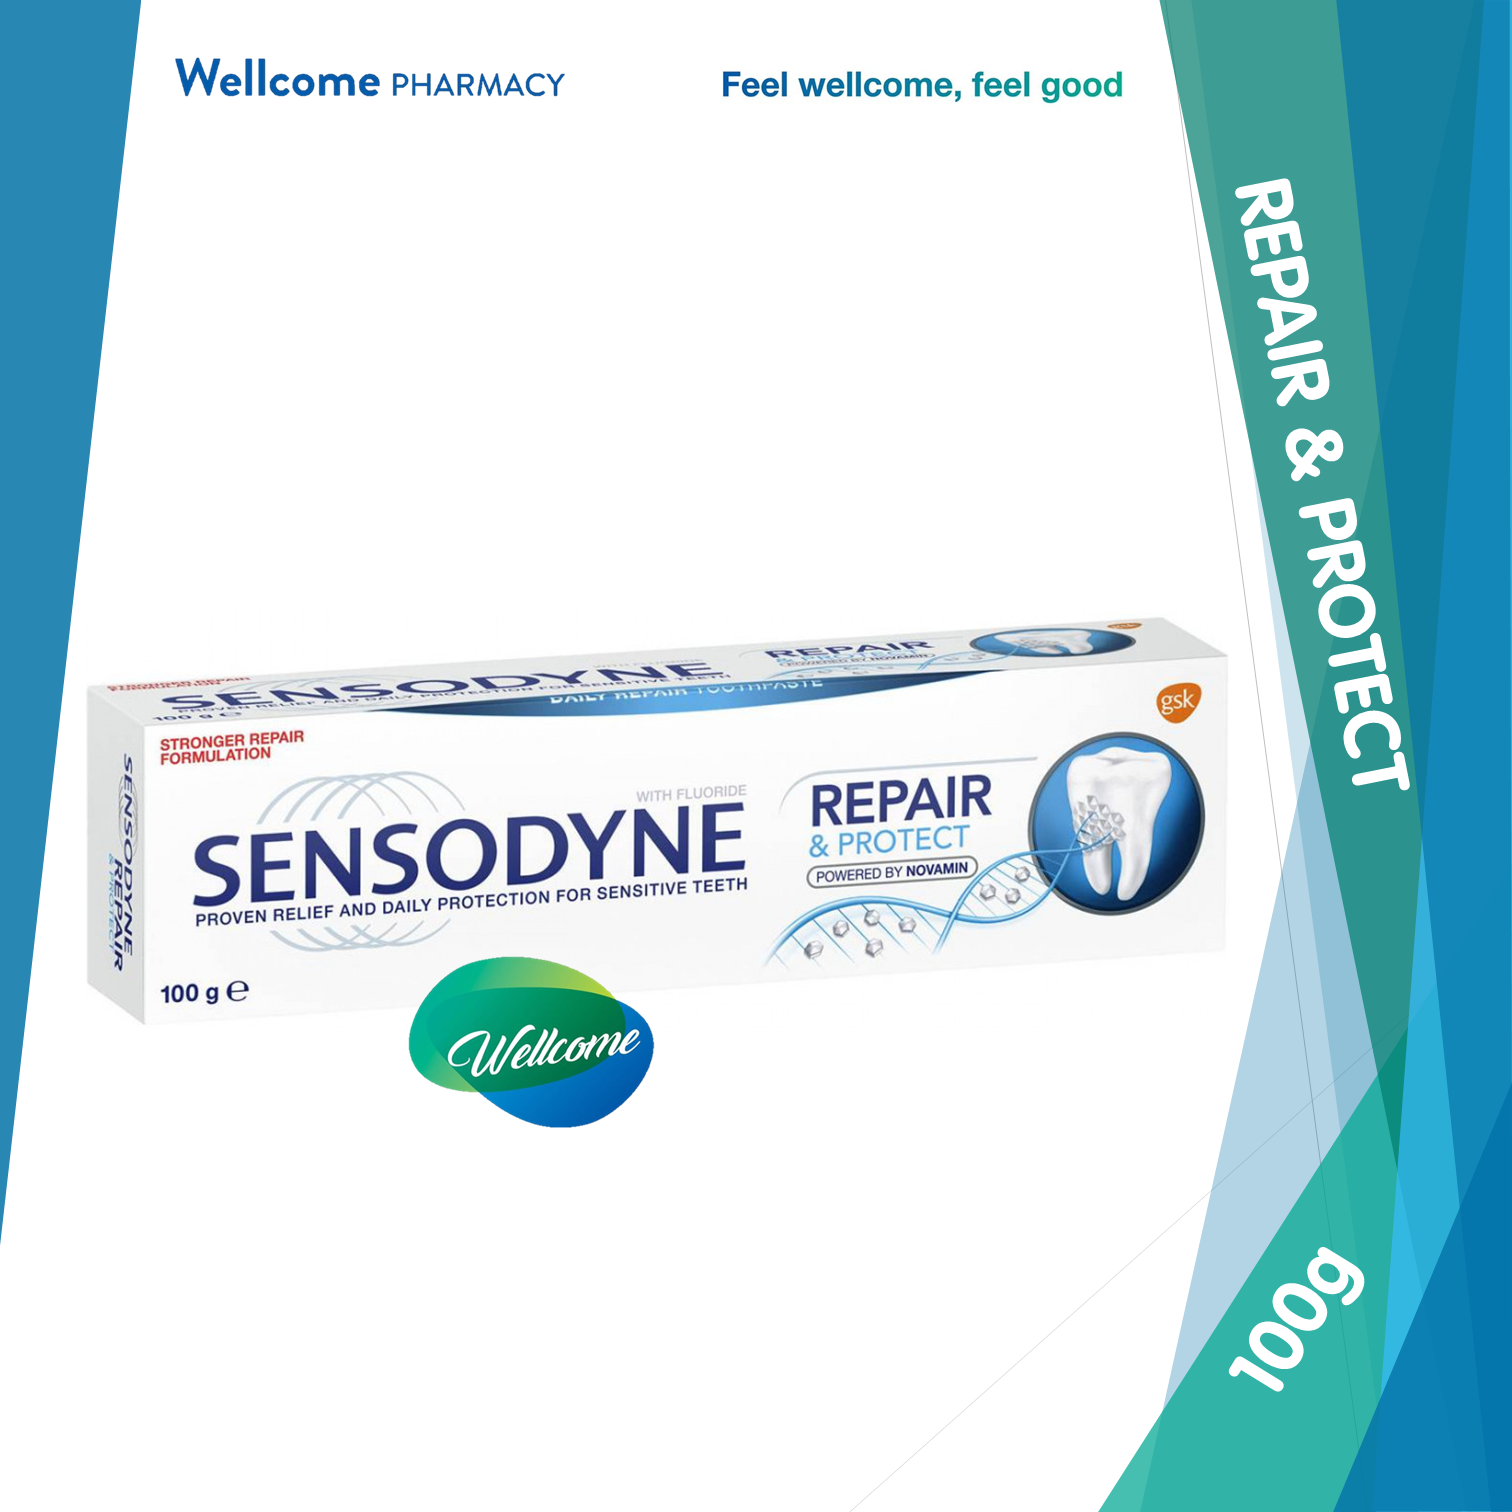 Sensodyne Repair & Protect Toothpaste - 100g.png